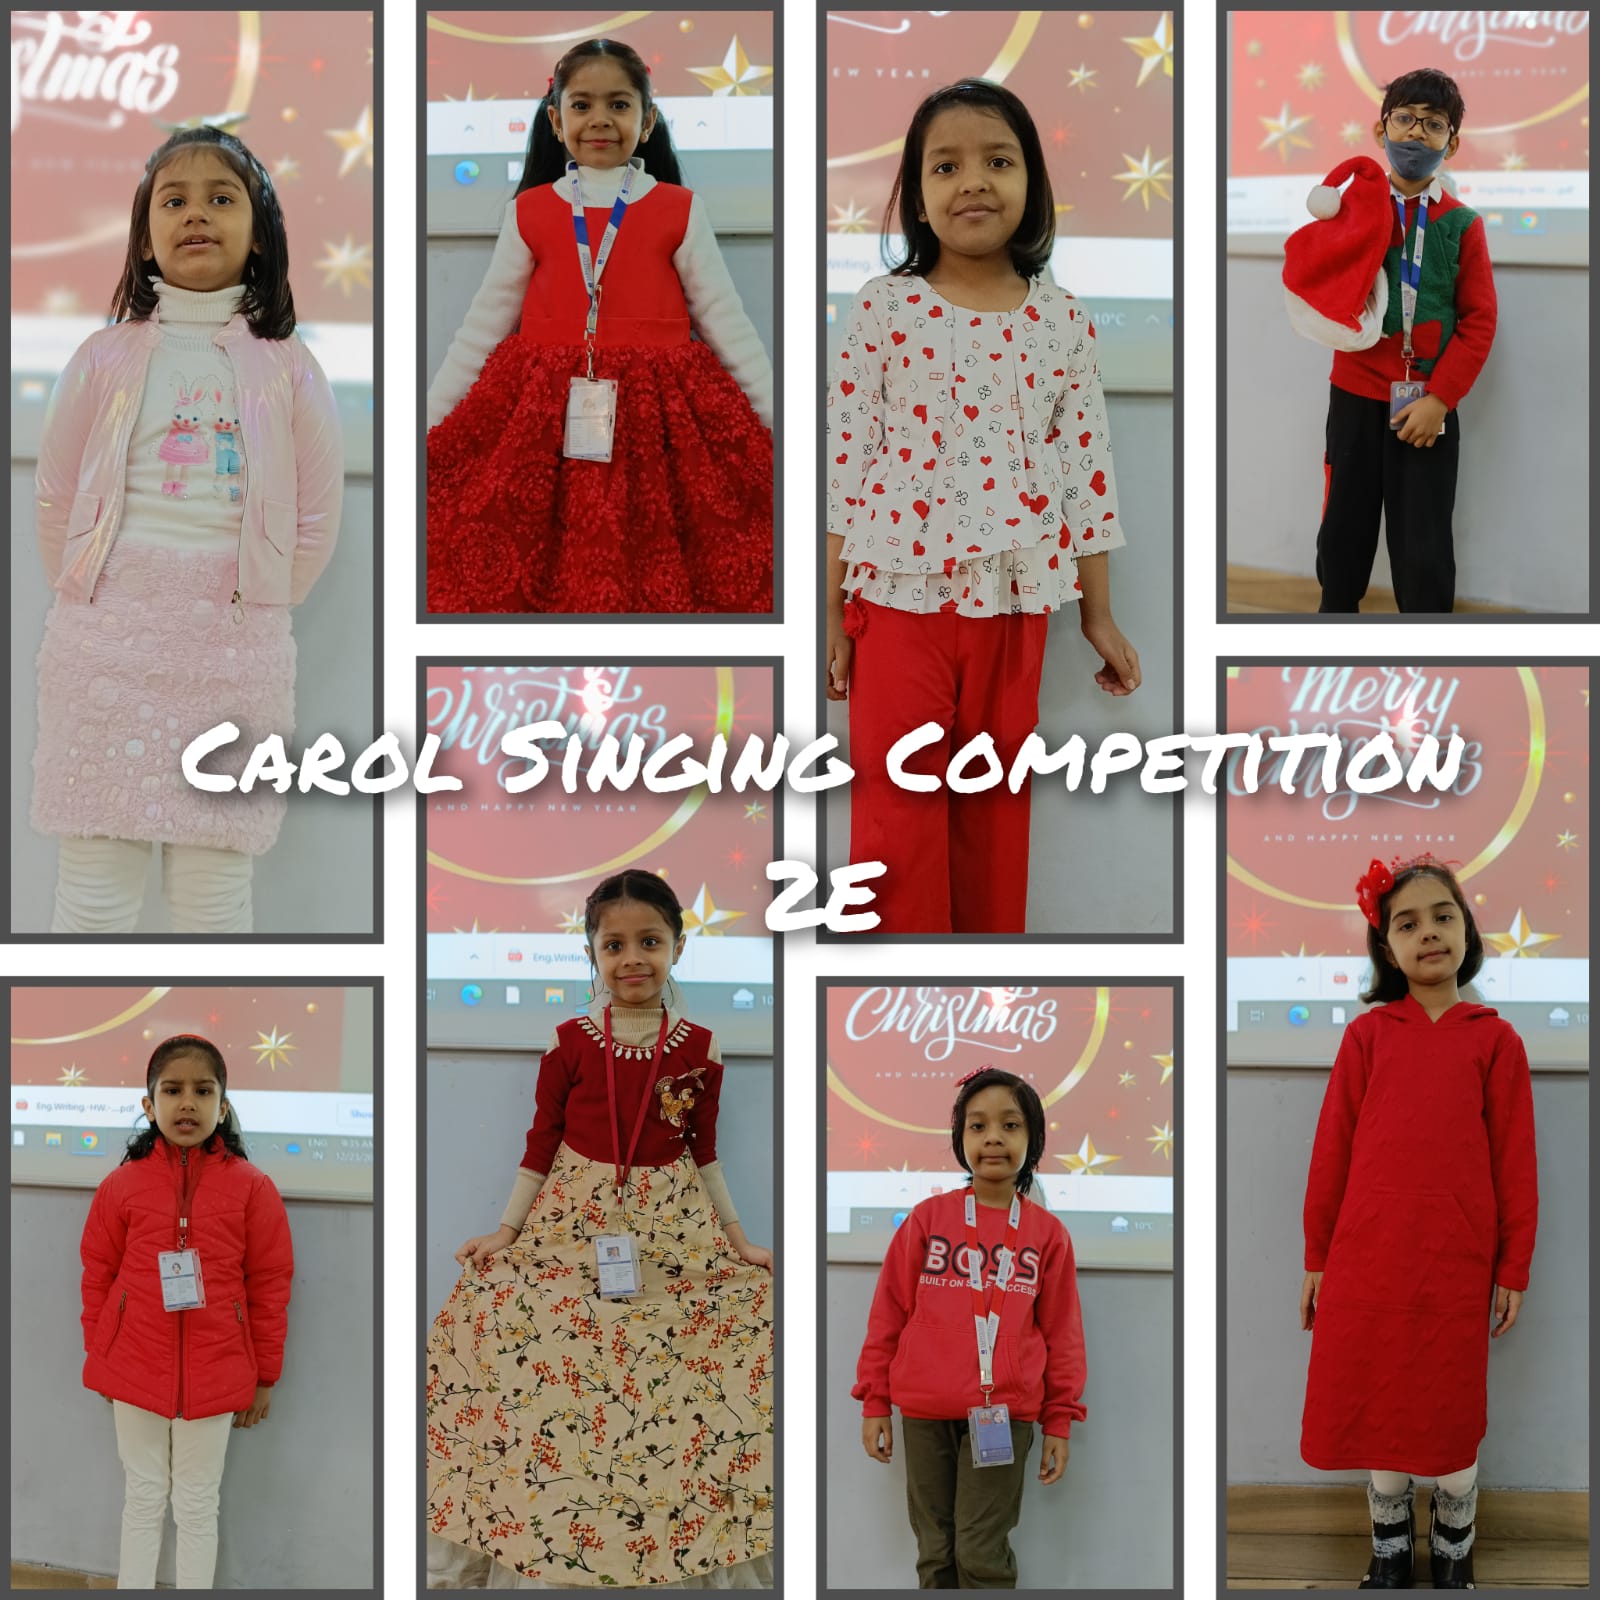 Carol Singing competition